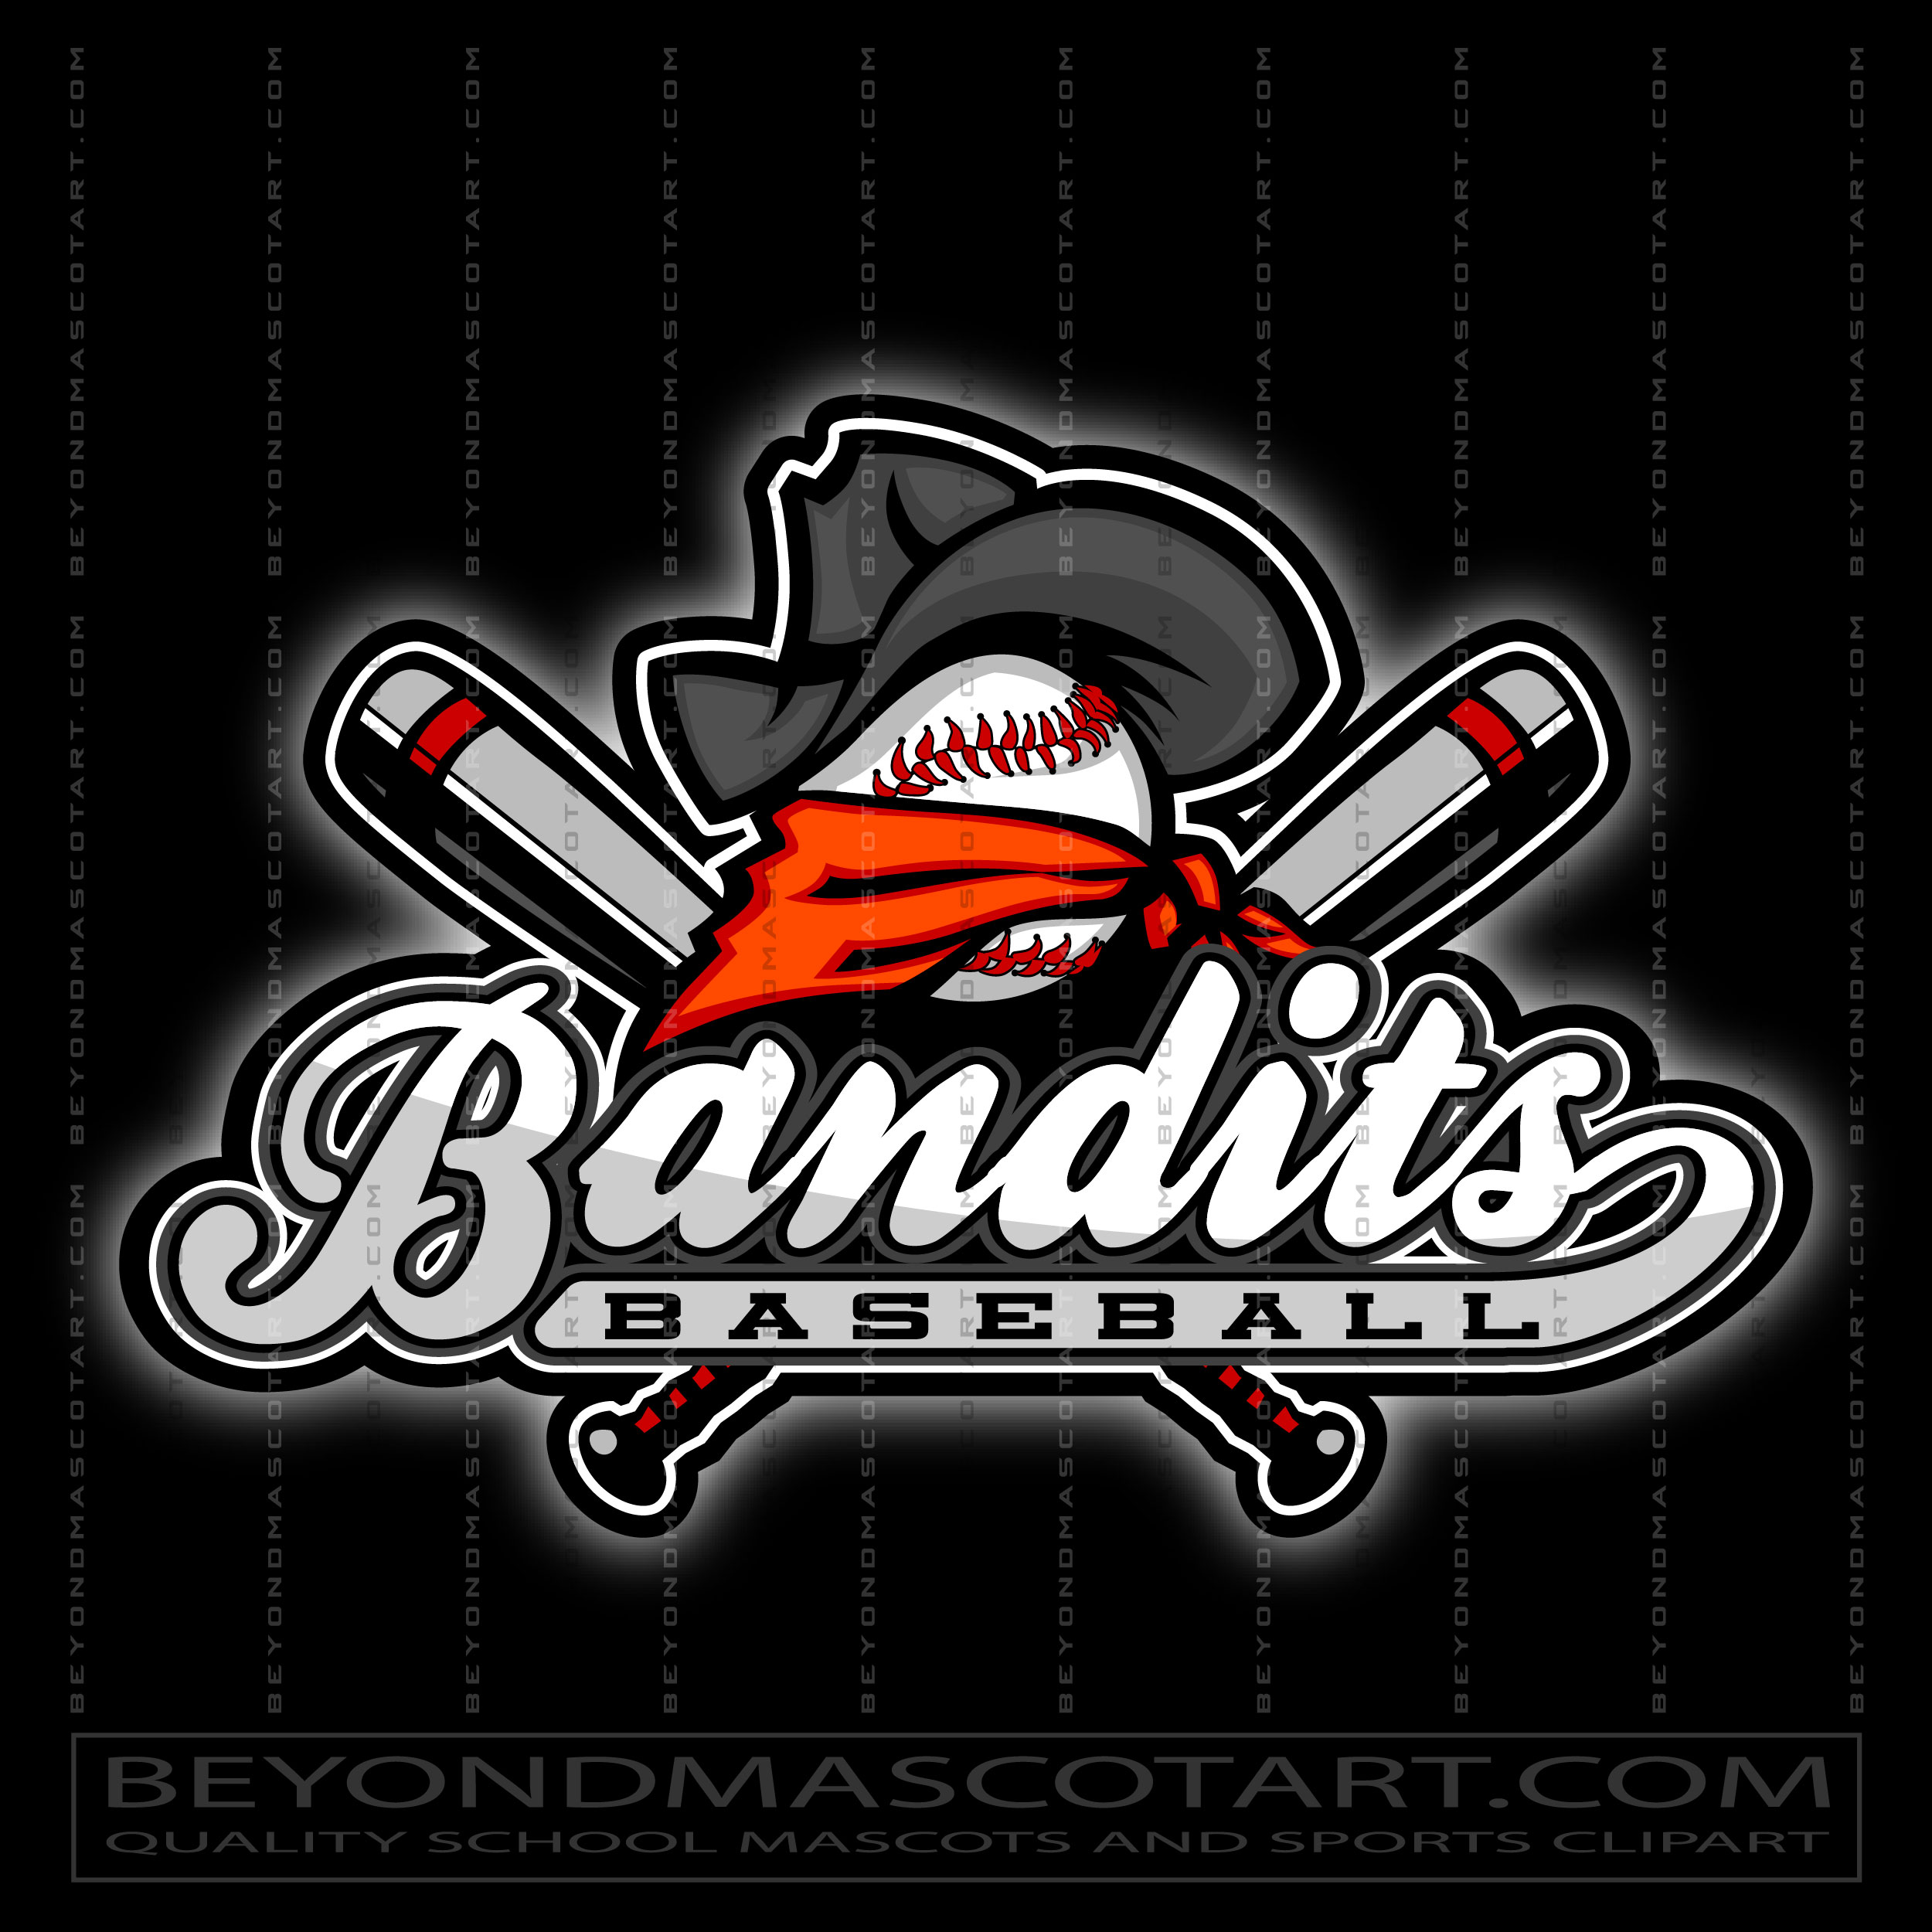 Custom T-Shirts for Bandits Baseball Team - Shirt Design Ideas